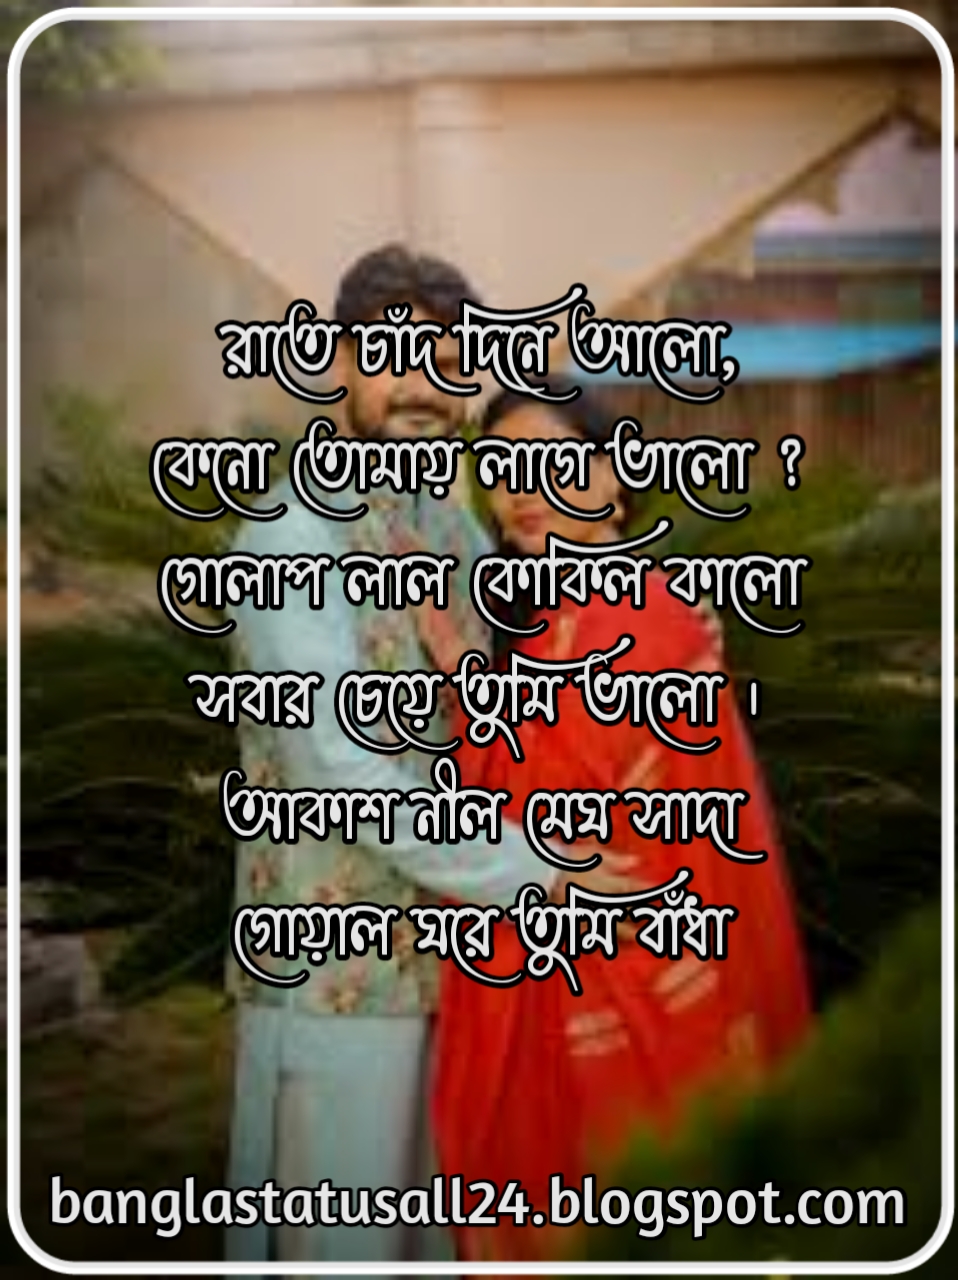 Bangla love status pic, love caption, bangla love quotes, facebook caption, প্রেমের ছন্দ, ছন্দ লেখা ছবি, bangla chondo picture